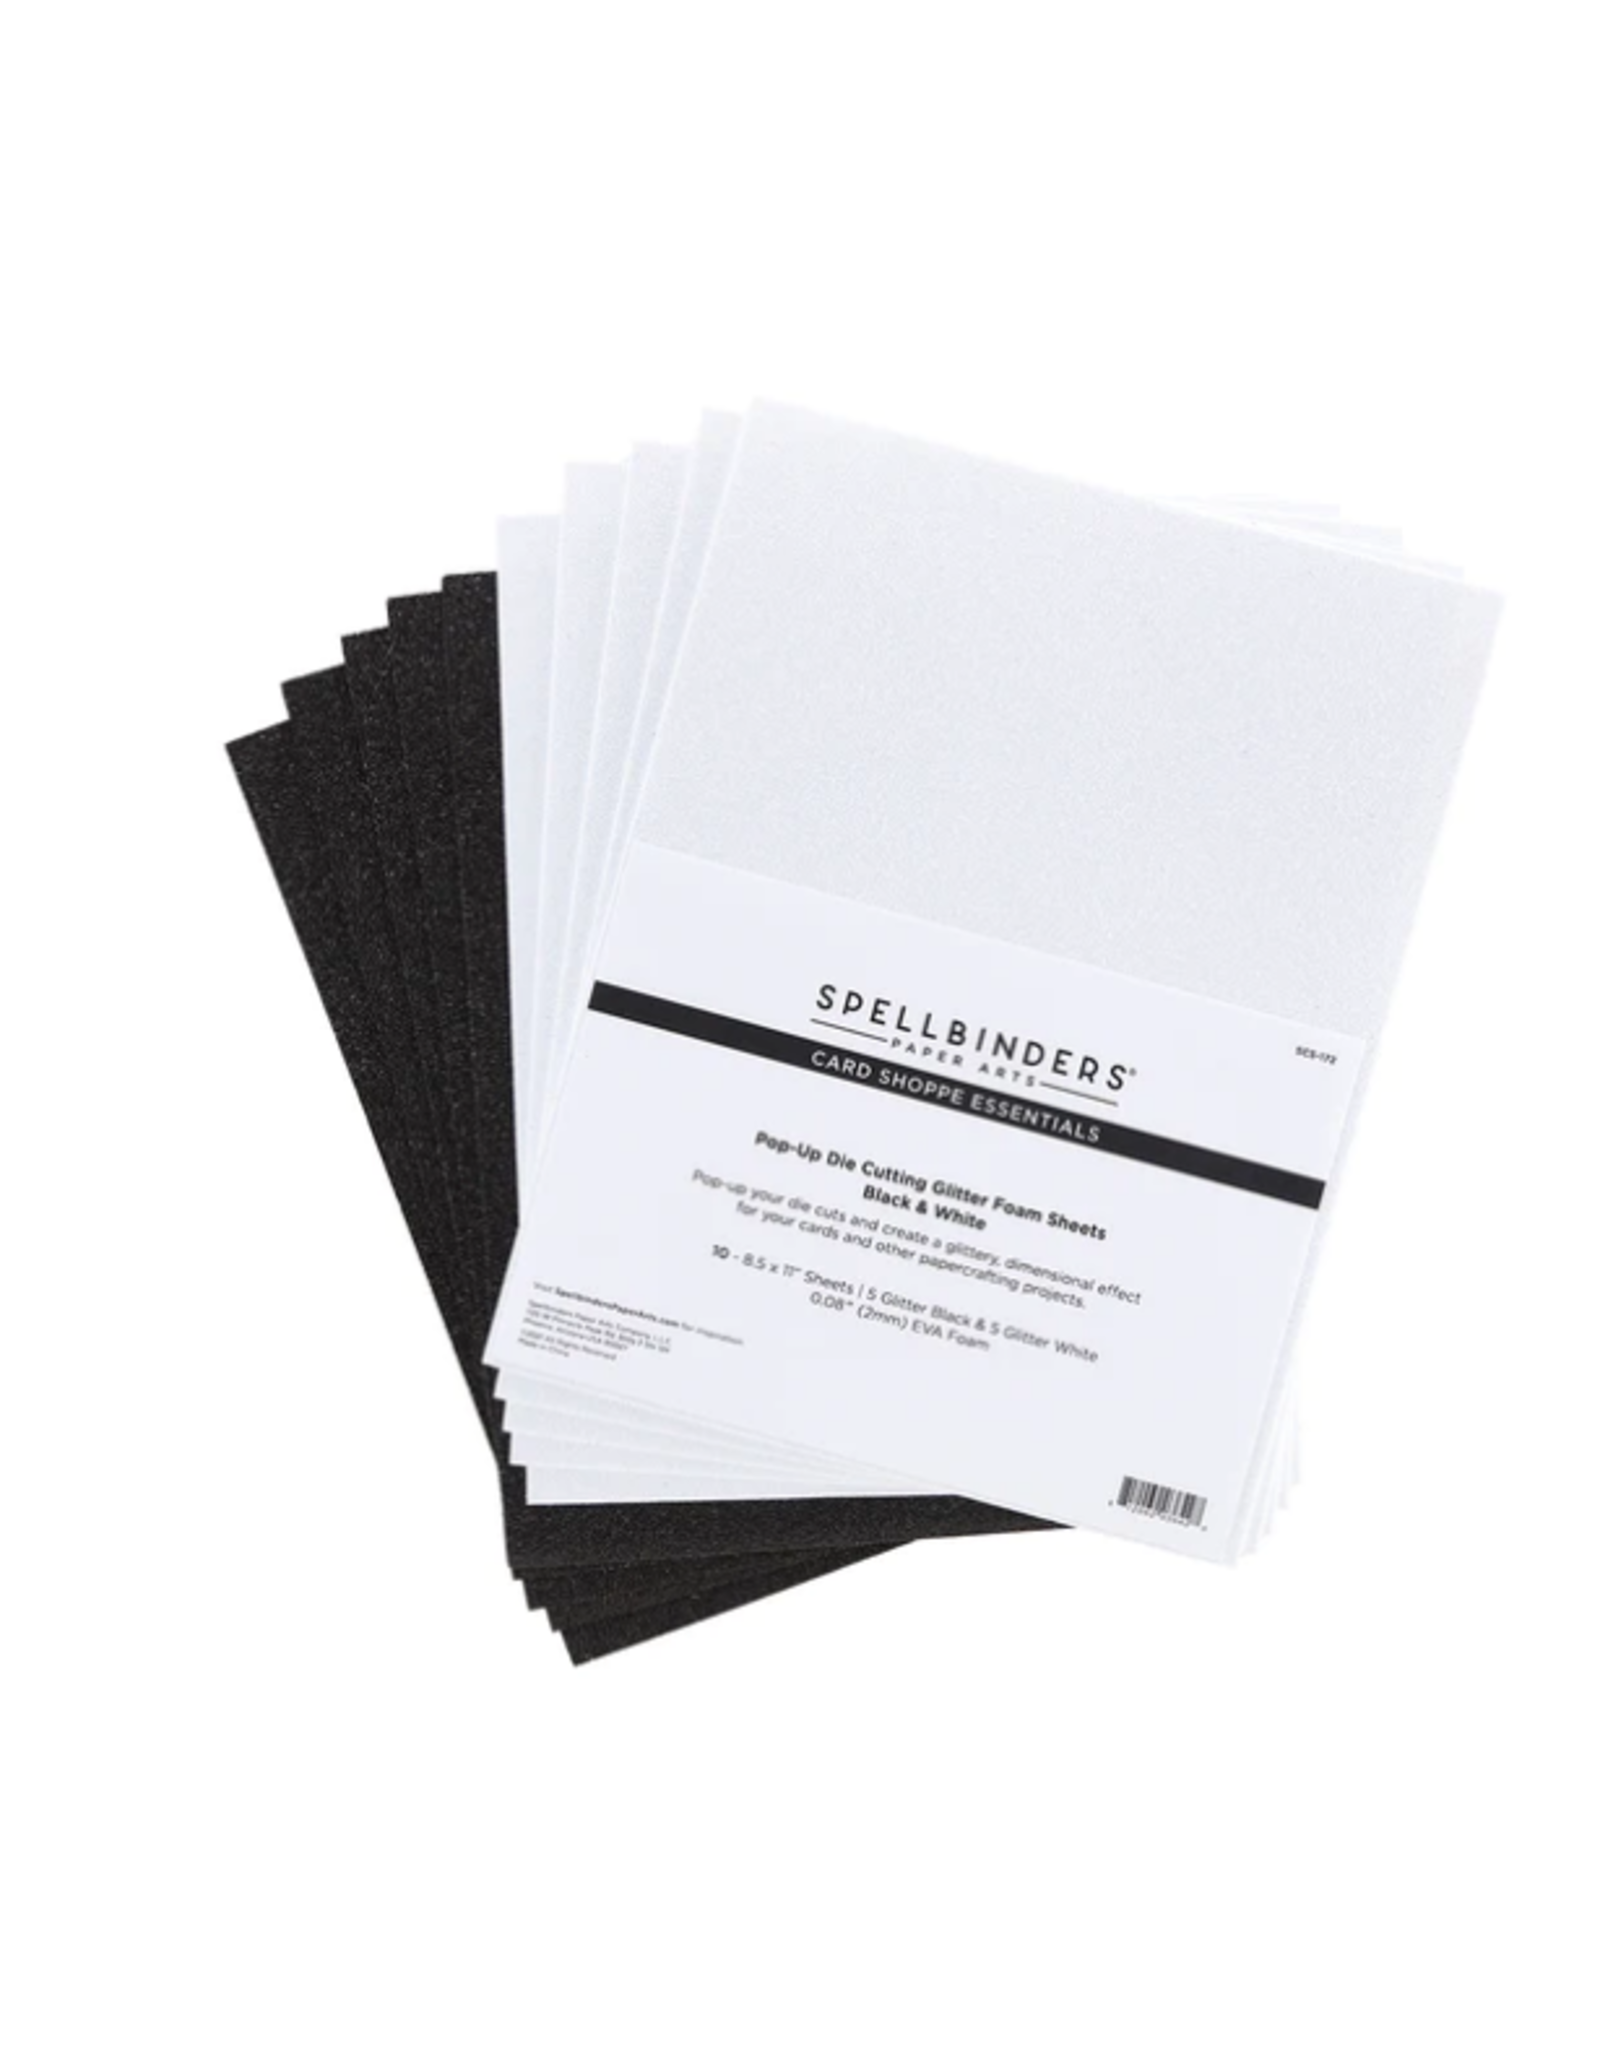 SPELLBINDERS SPELLBINDERS CARD SHOPPE ESSENTIALS BLACK & WHITE GLITTER FOAM SHEETS